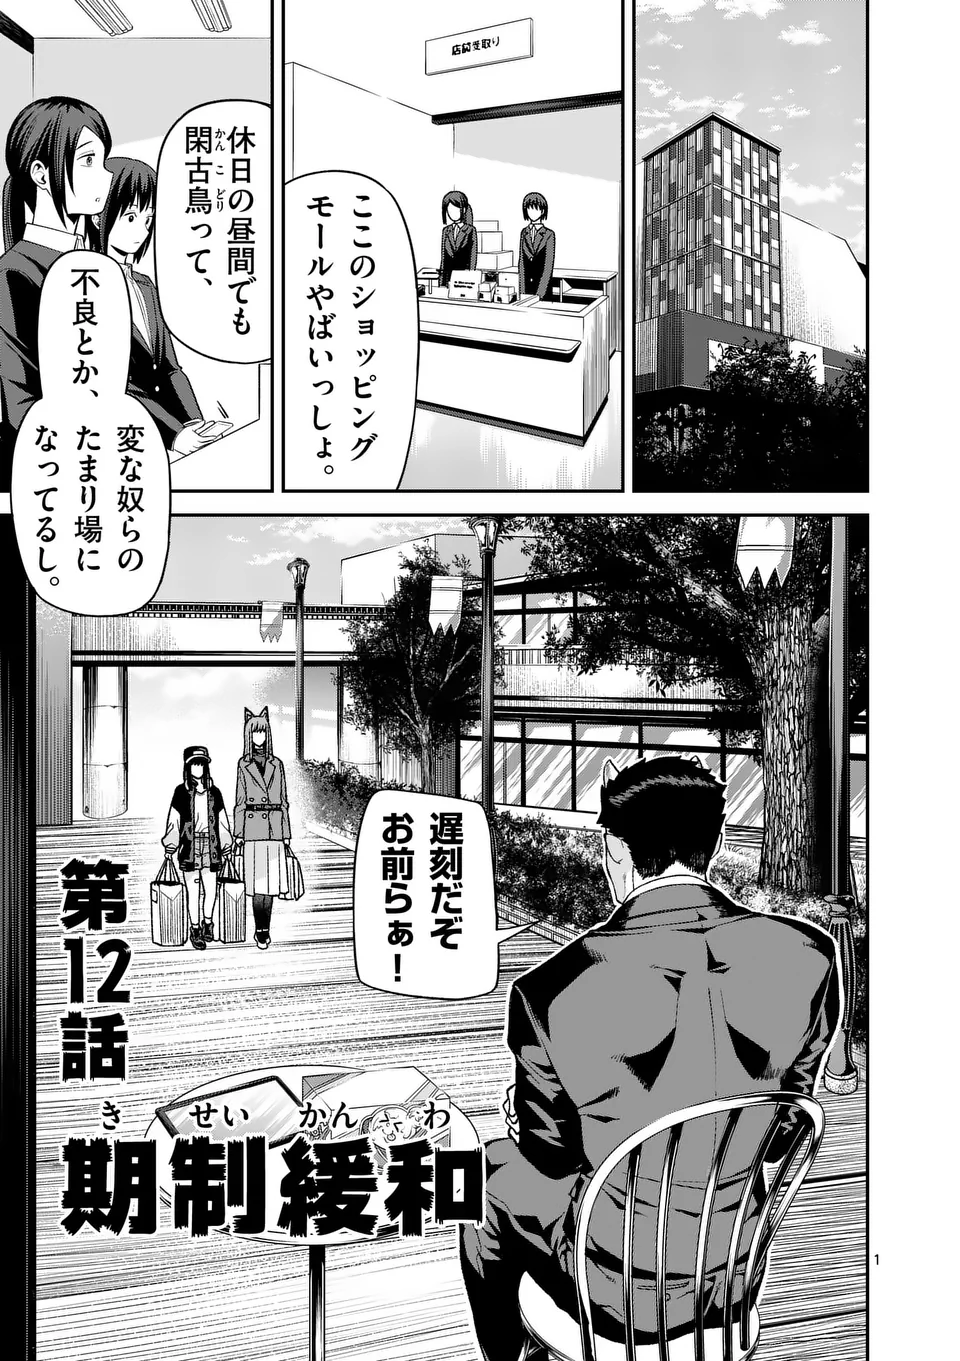 Bakemono Goroshi no Psycholily - Chapter 12.1 - Page 1